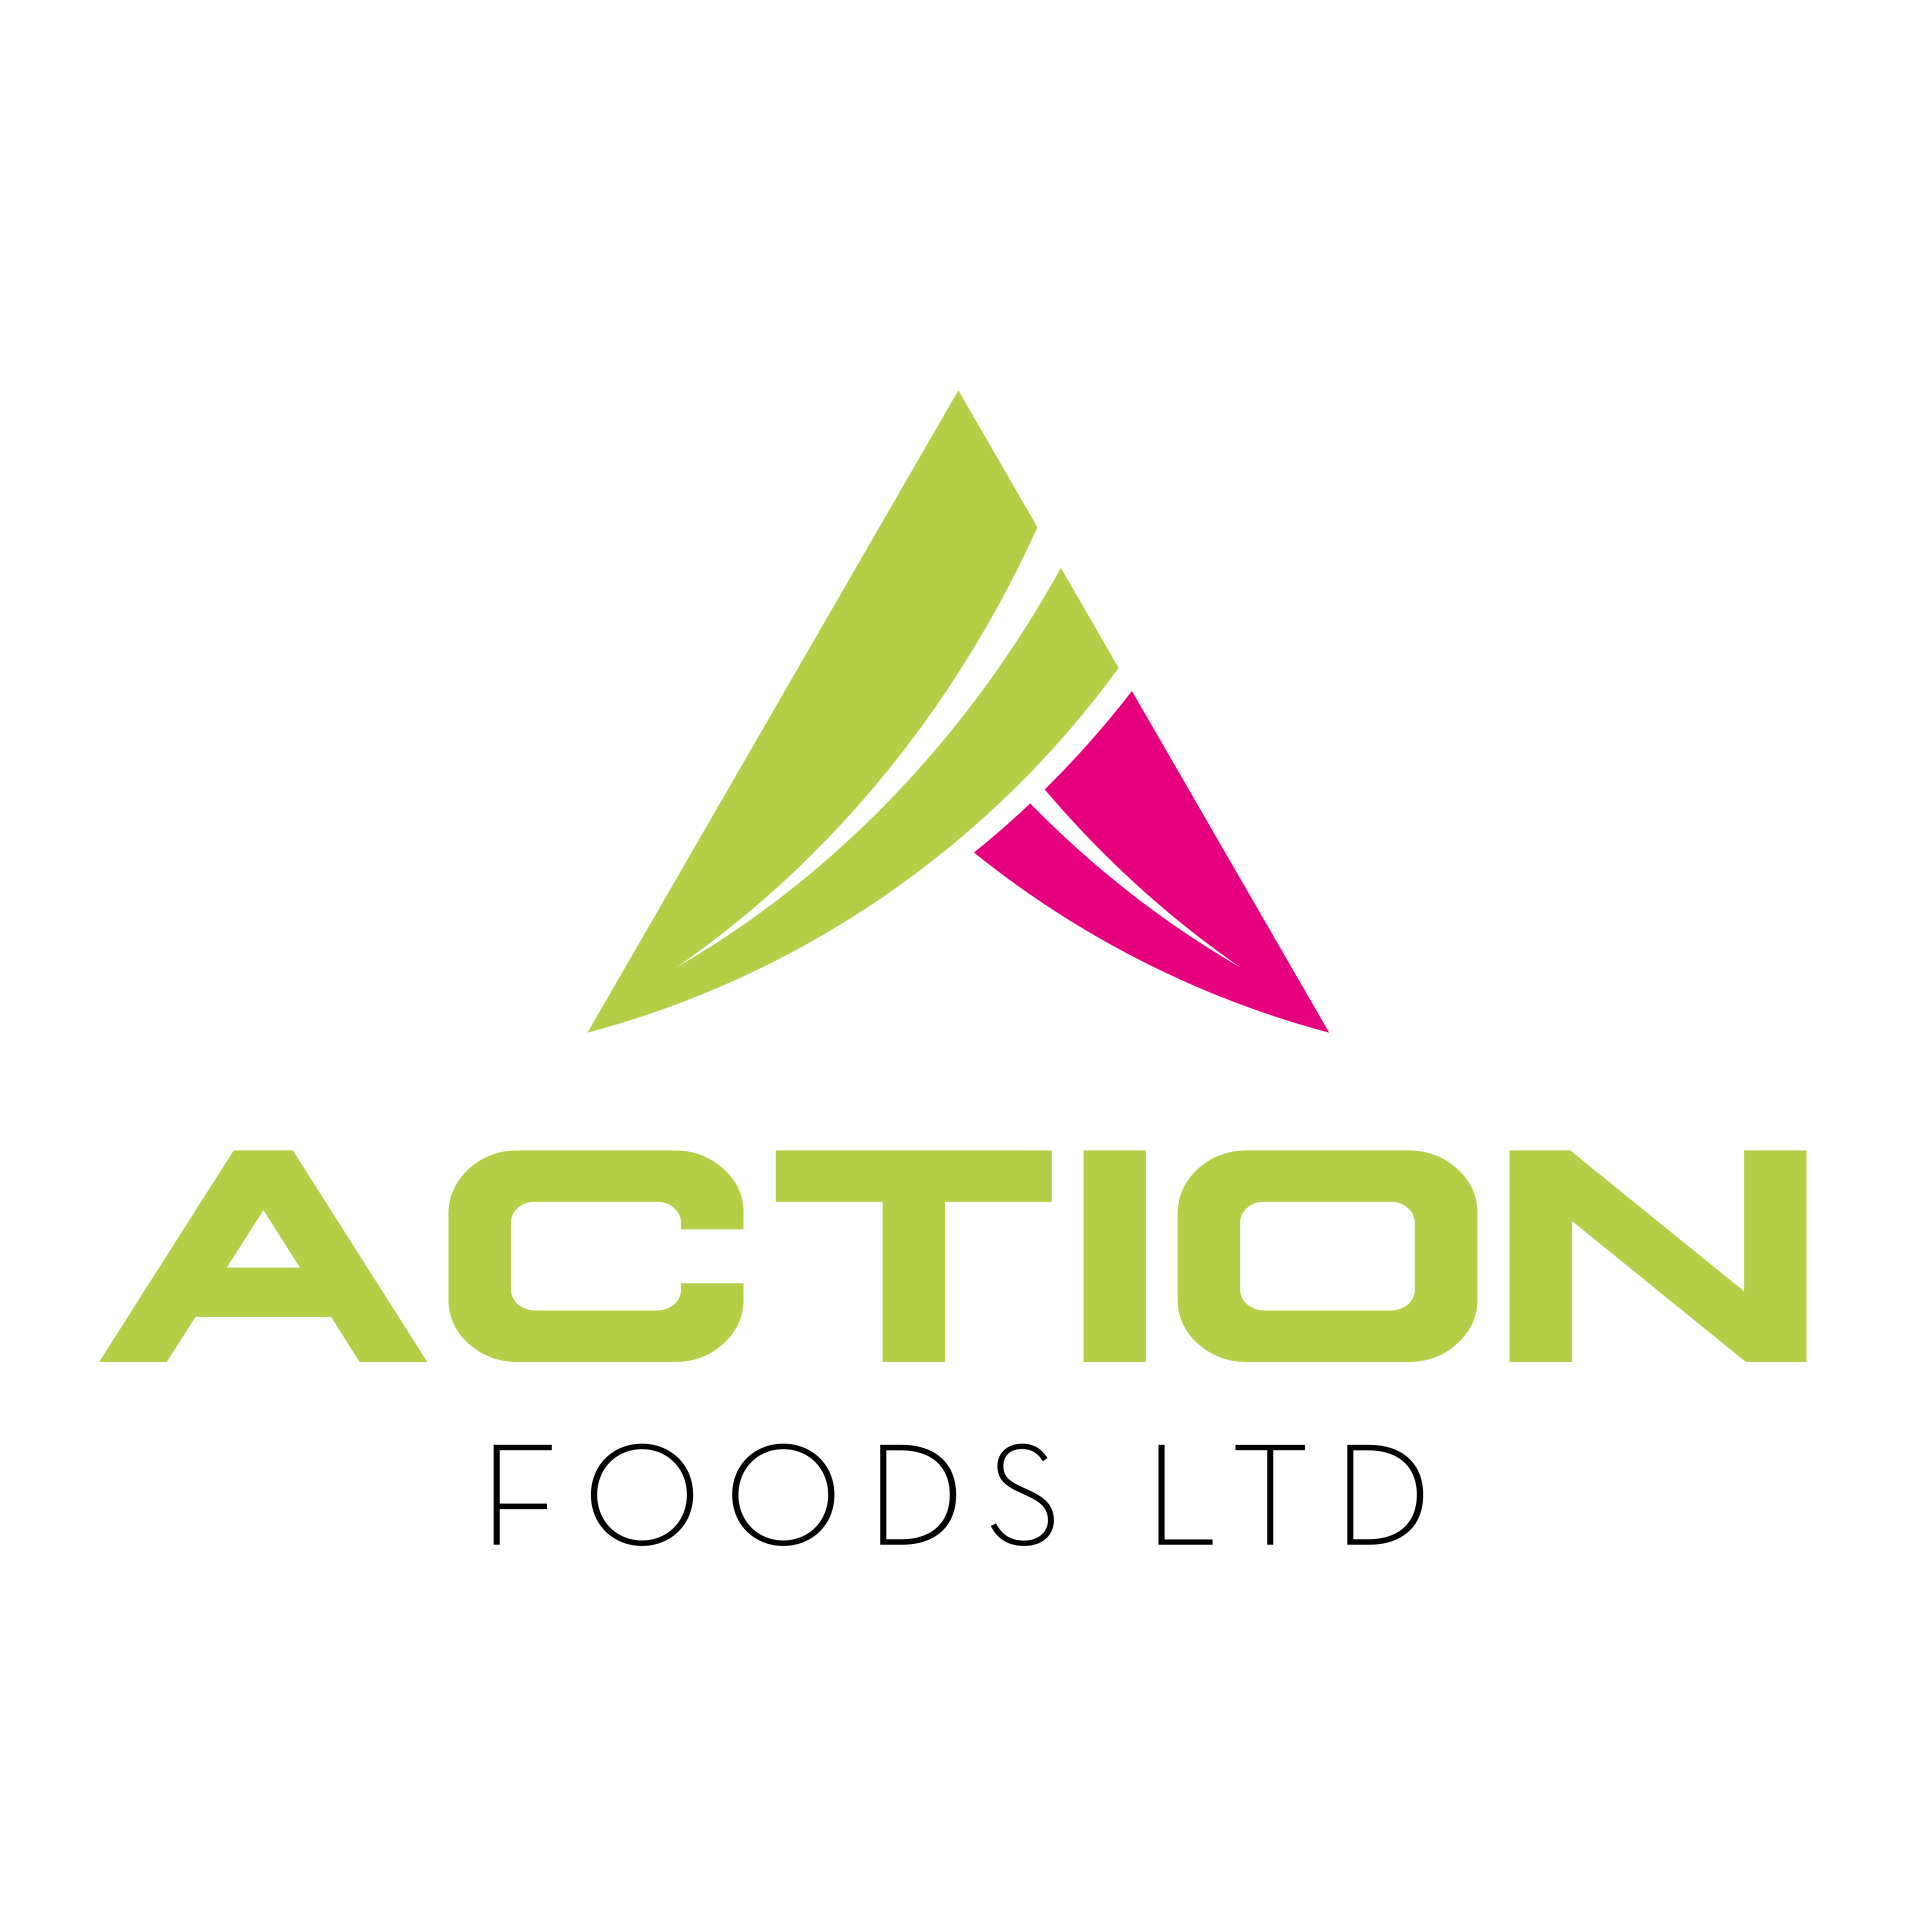 Action Foods Ltd